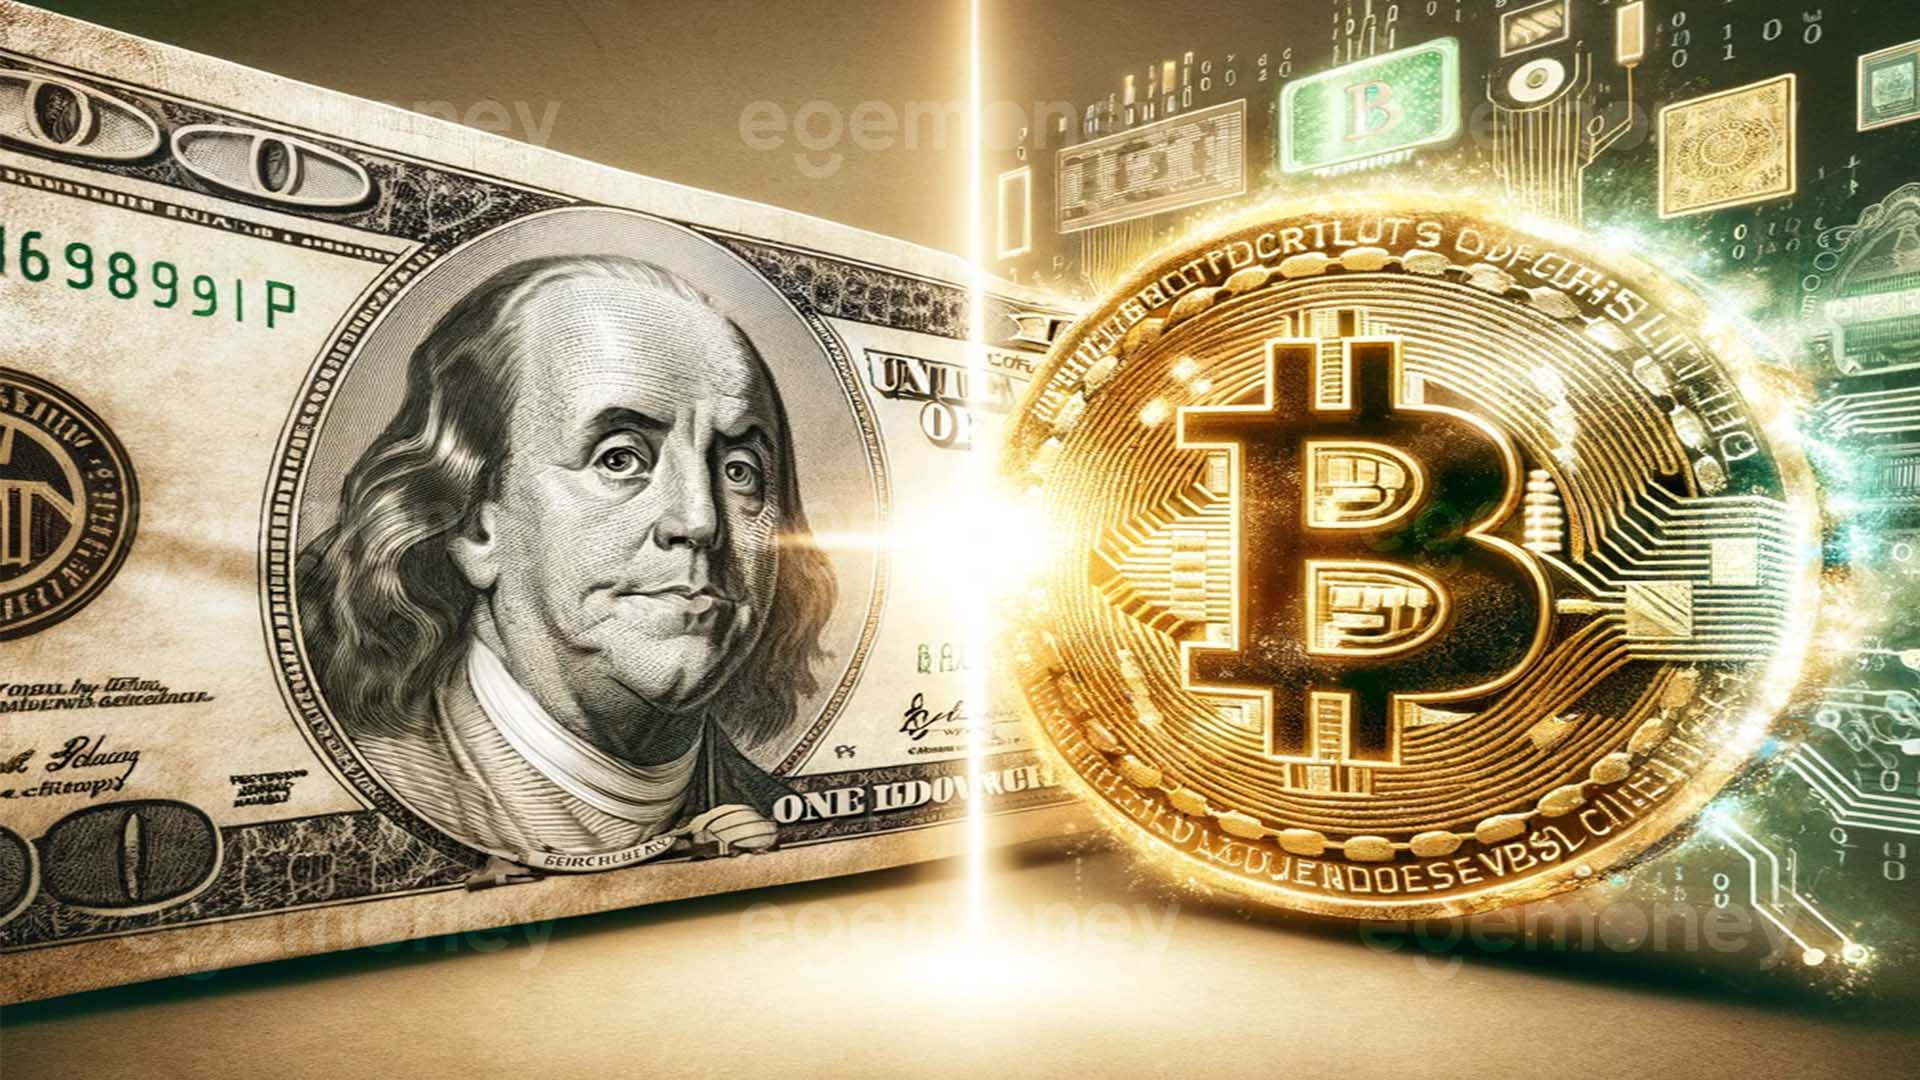 Morgan Stanley: Bitcoin and CBDCs Threatening the Dollar